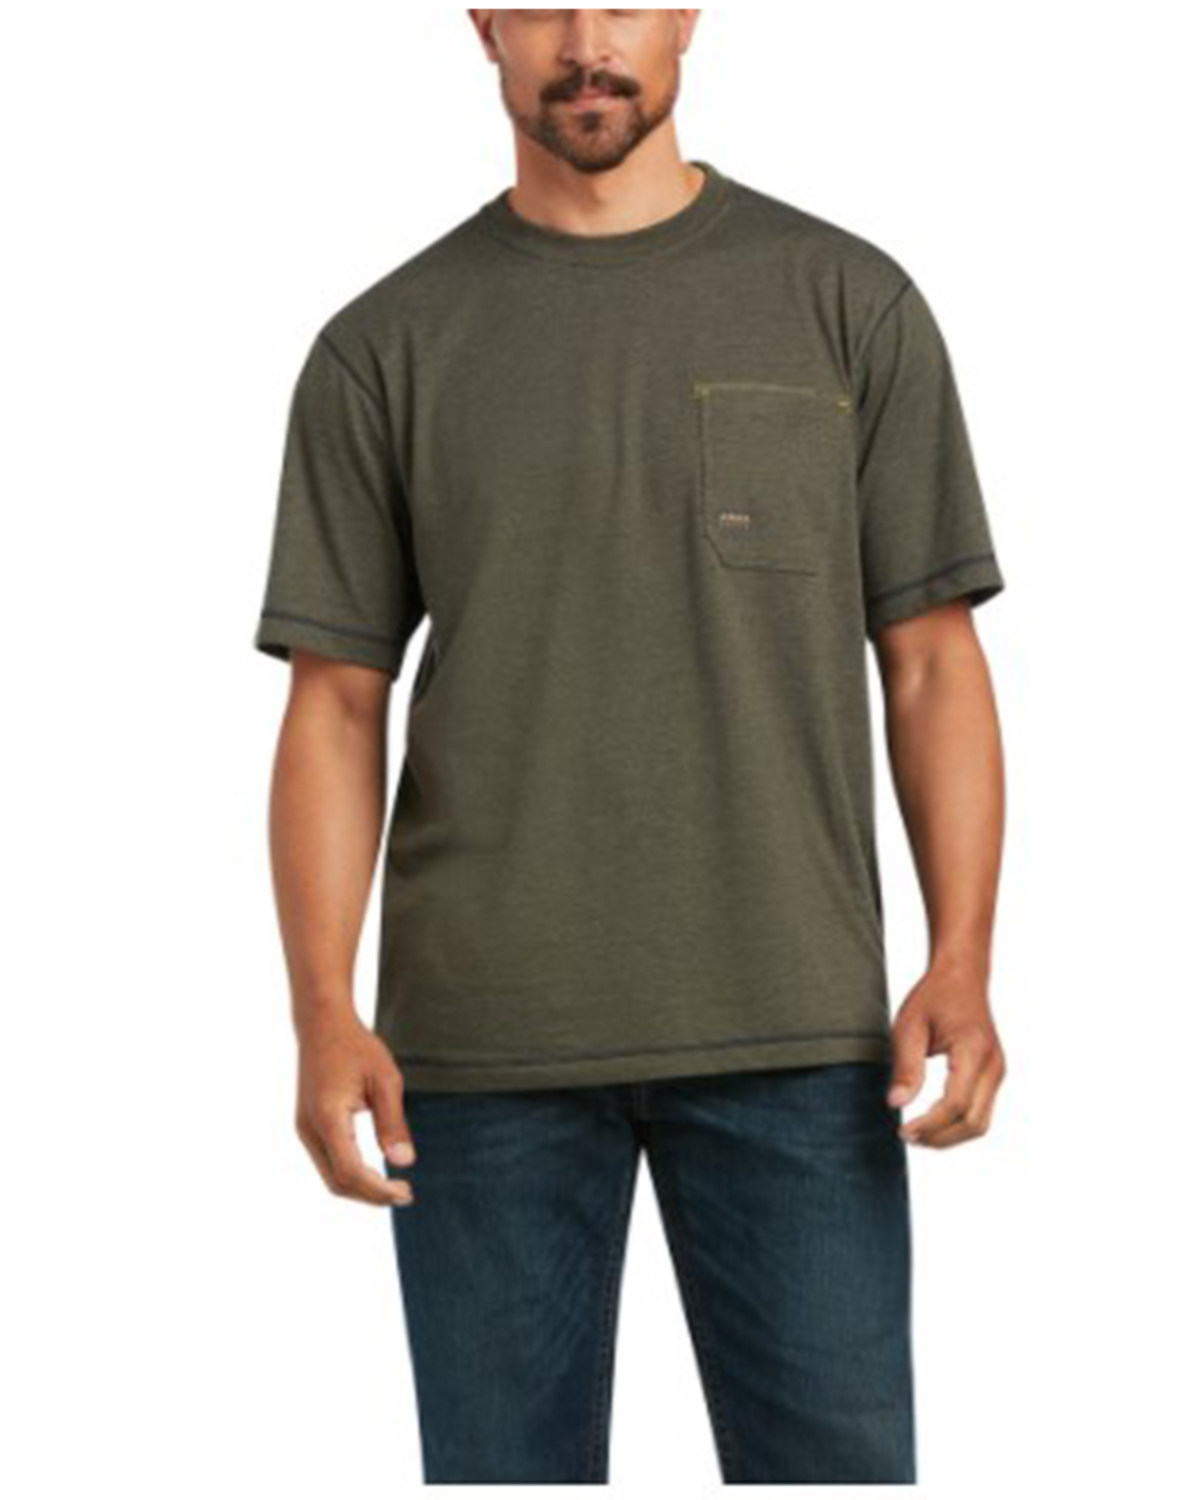 Ariat Men's Heather Sage Rebar Workman Reflective Flag Graphic Short Sleeve Work T-Shirt - Tall